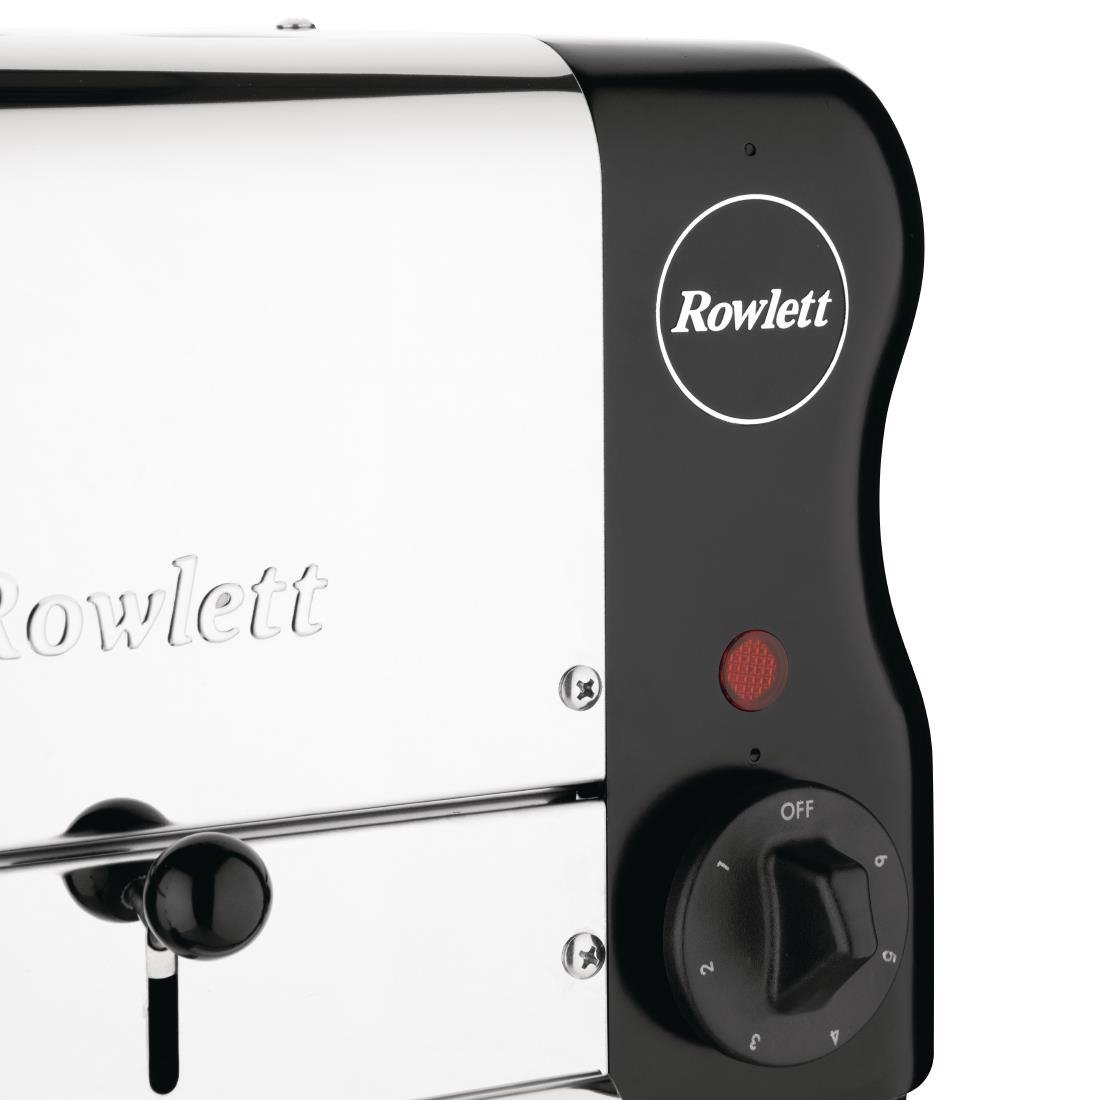 Rowlett Esprit 2 Slot Toaster Jet Black